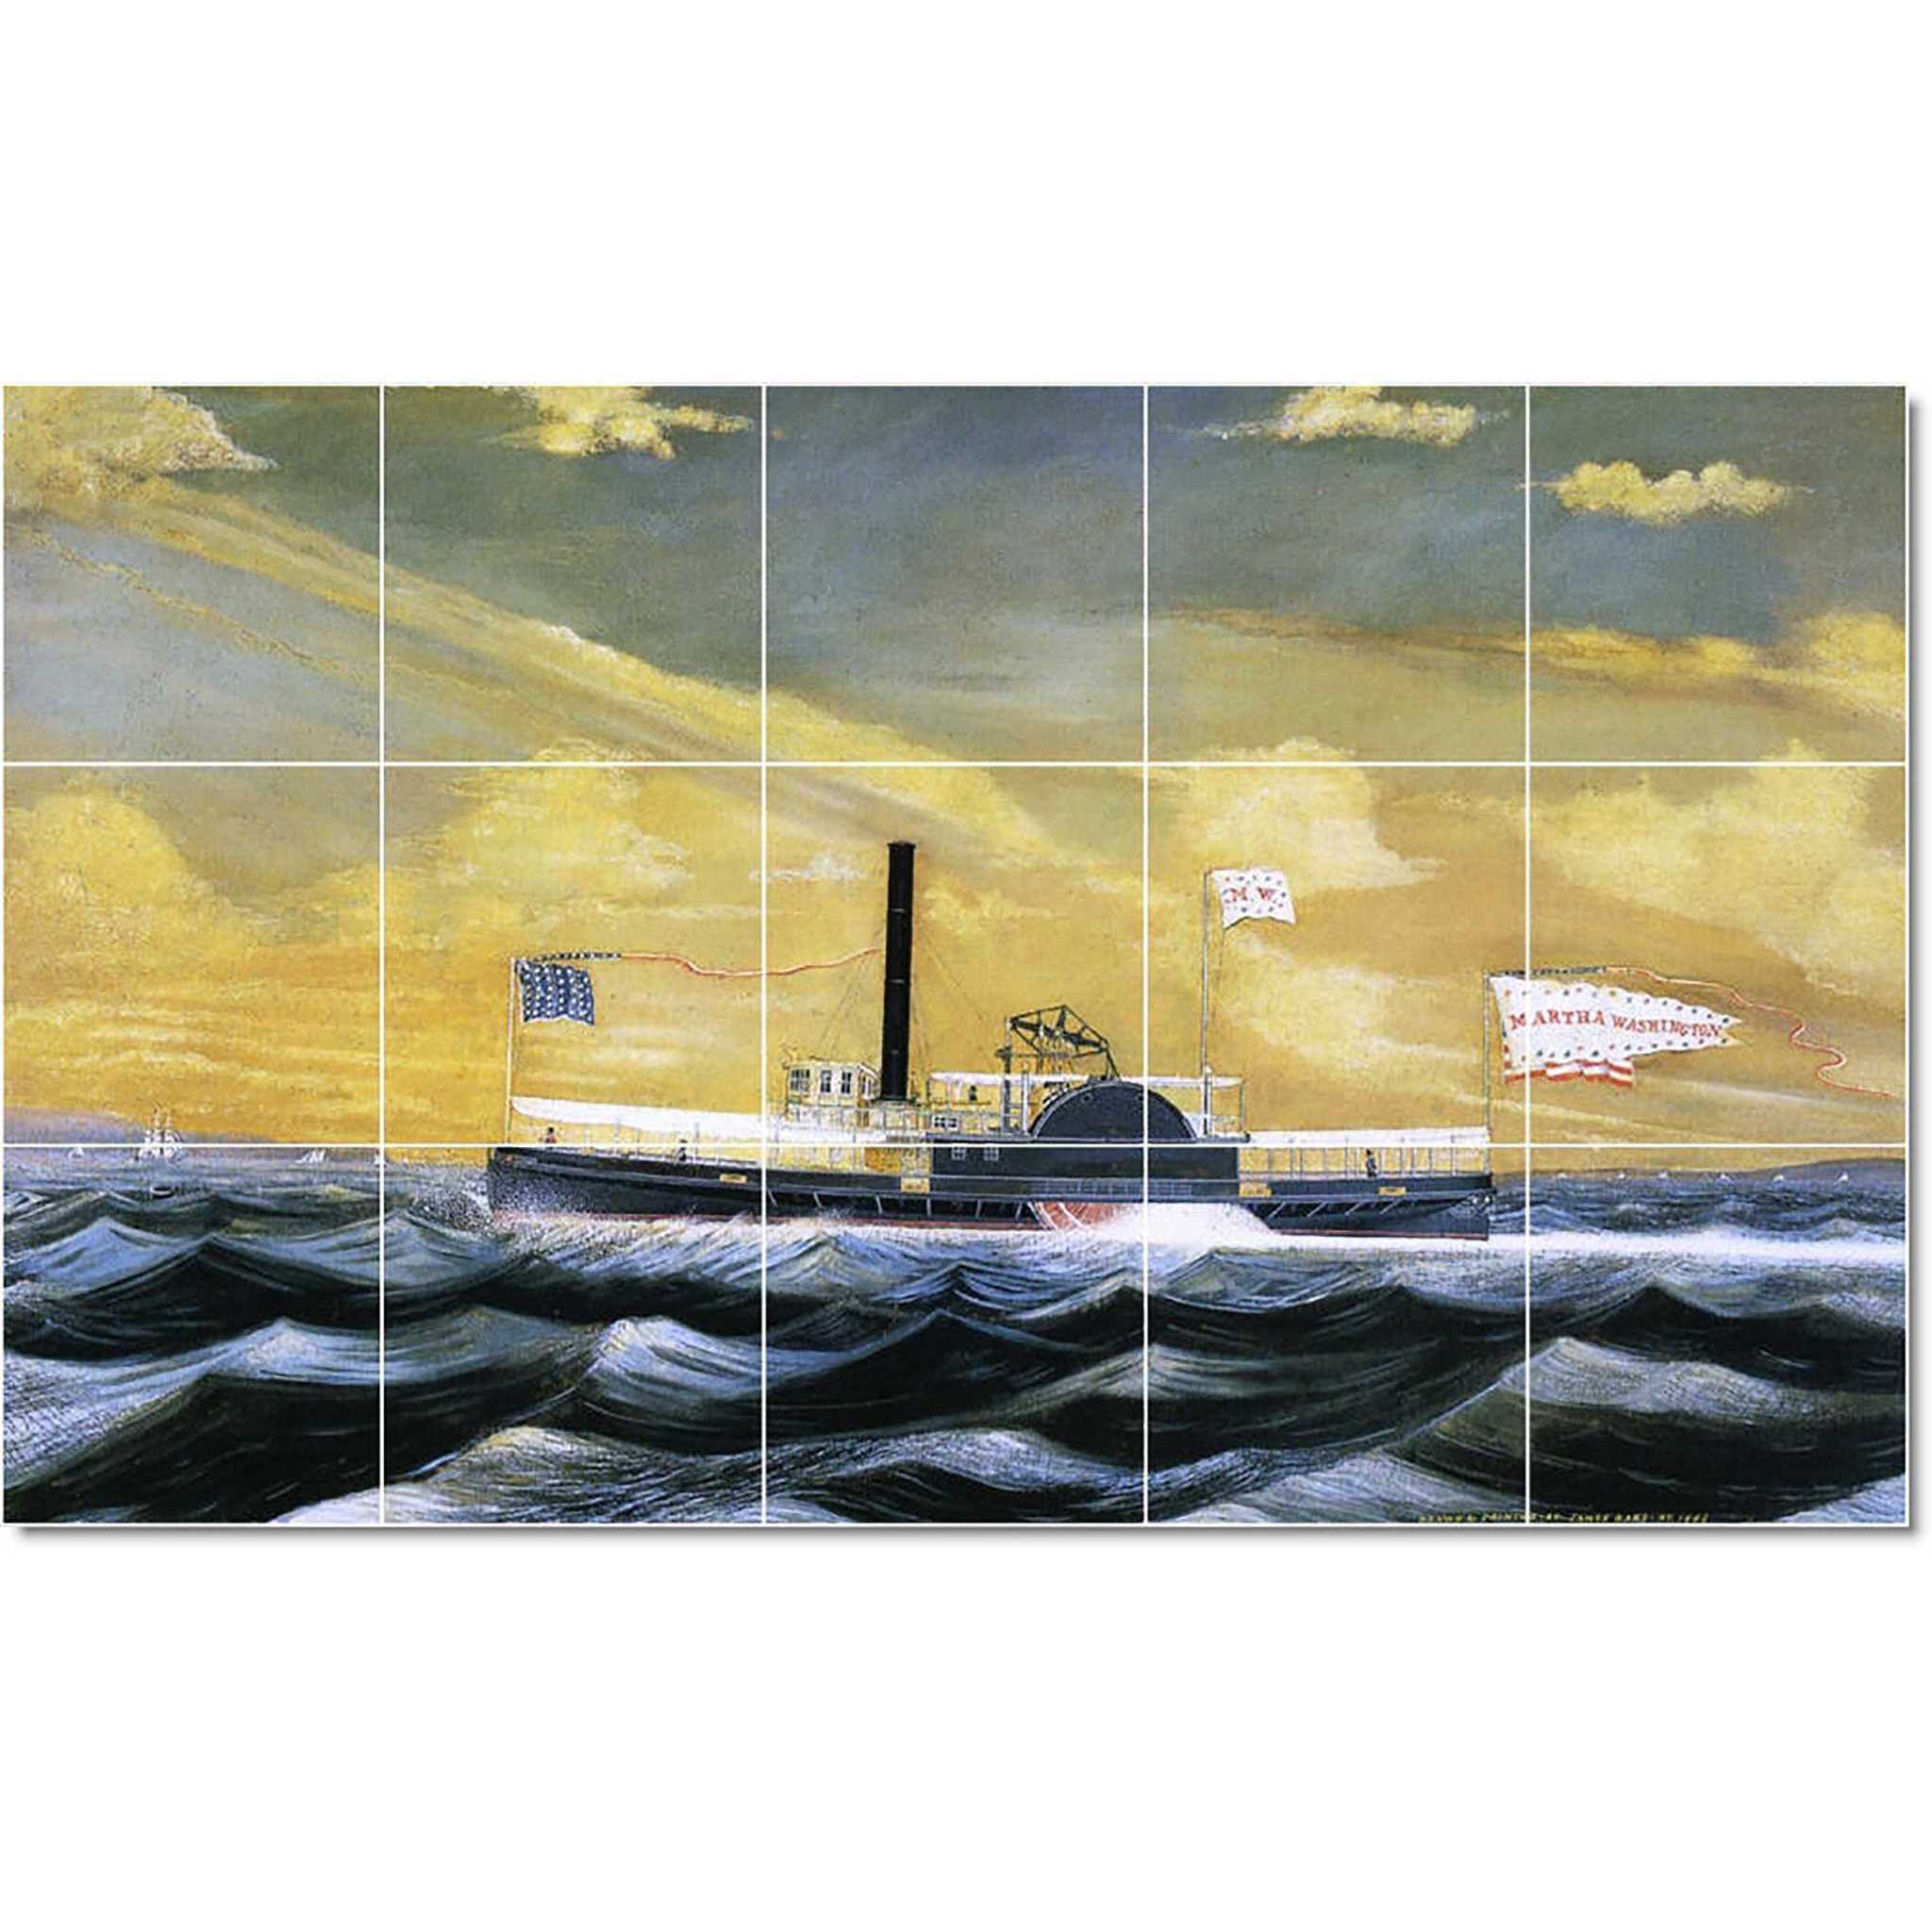 james bard boat ship painting ceramic tile mural p22084